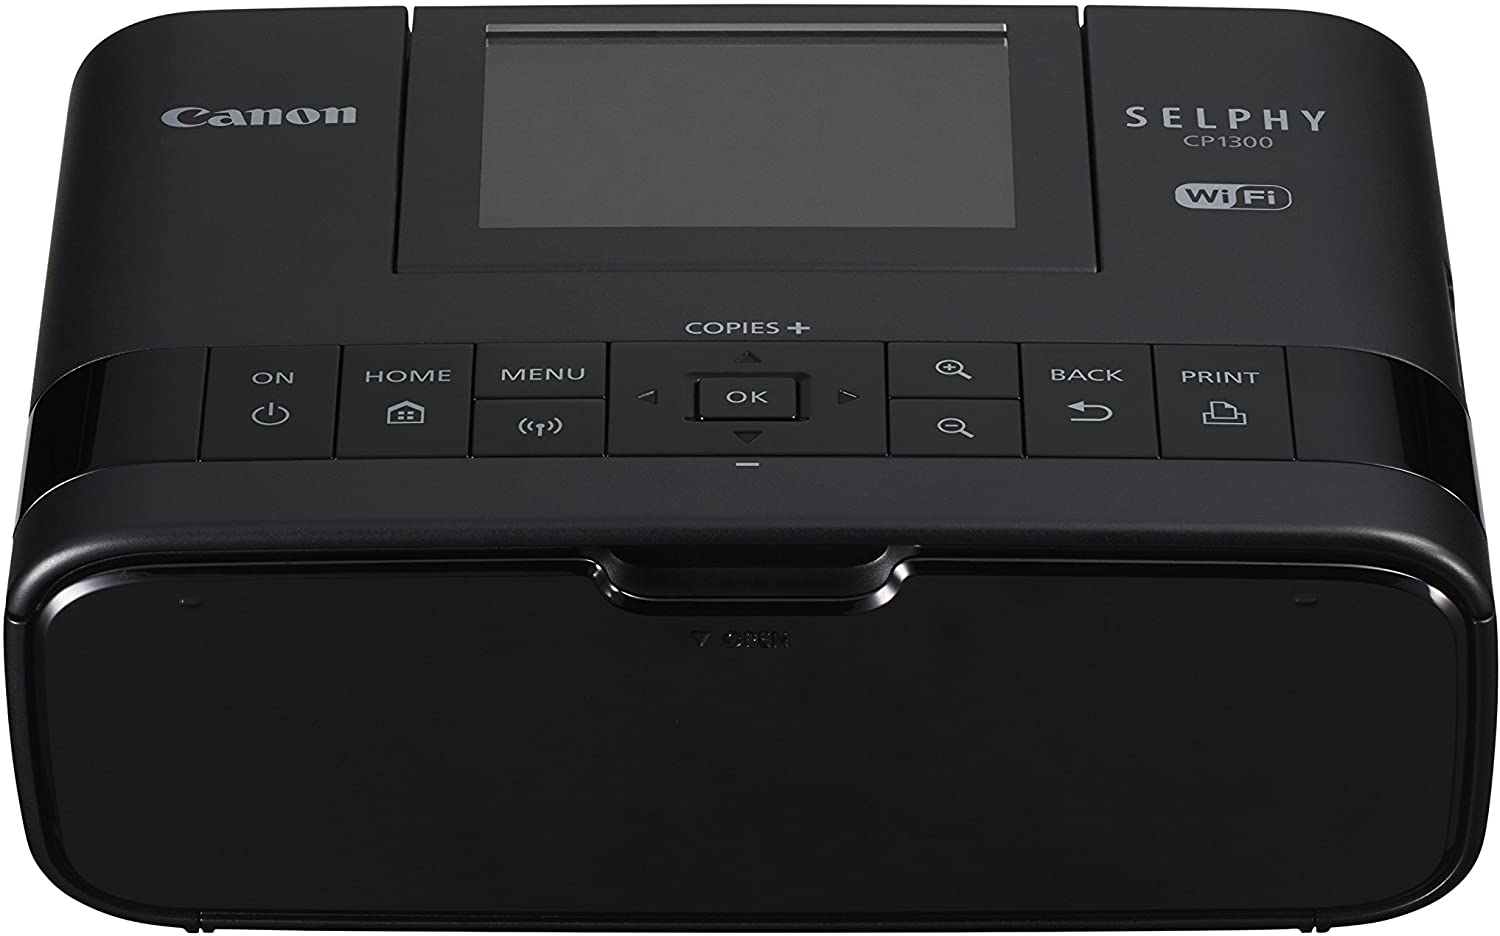  Canon Selphy CP1300 Compact Photo Printer - Black uk reviews